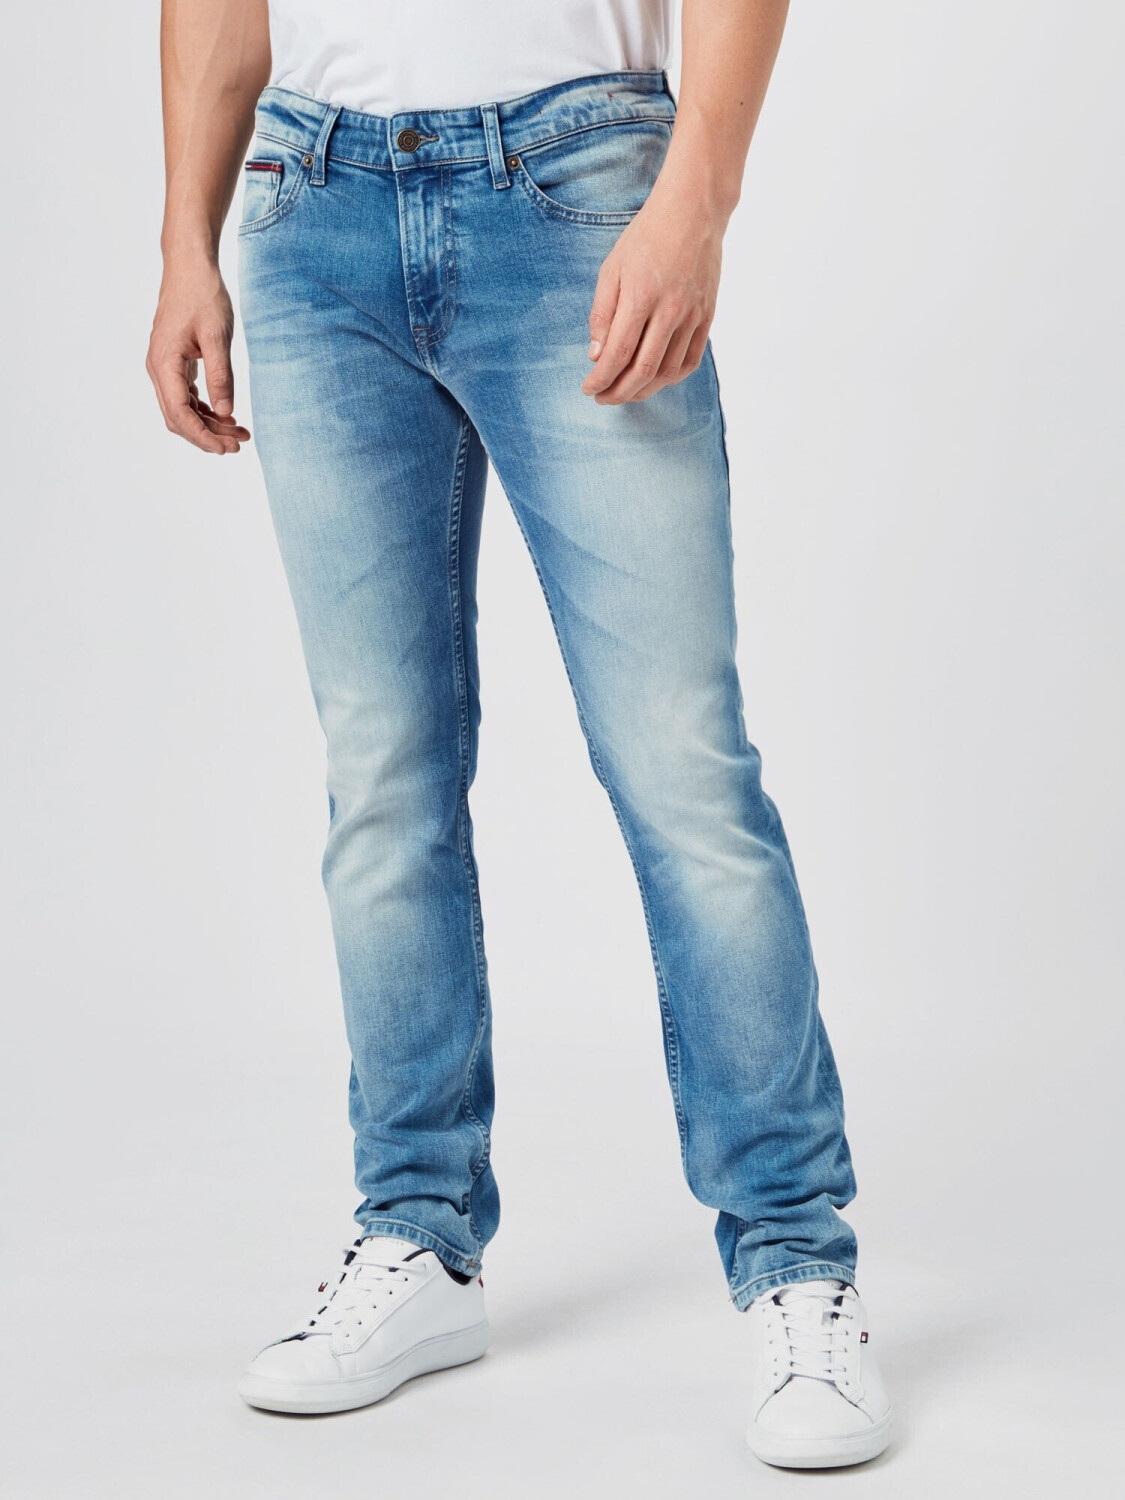 blanding Seraph Vedrørende Buy Tommy Hilfiger Scanton Slim Fit Jeans wilson light blue stretch from  £48.93 (Today) – Best Deals on idealo.co.uk